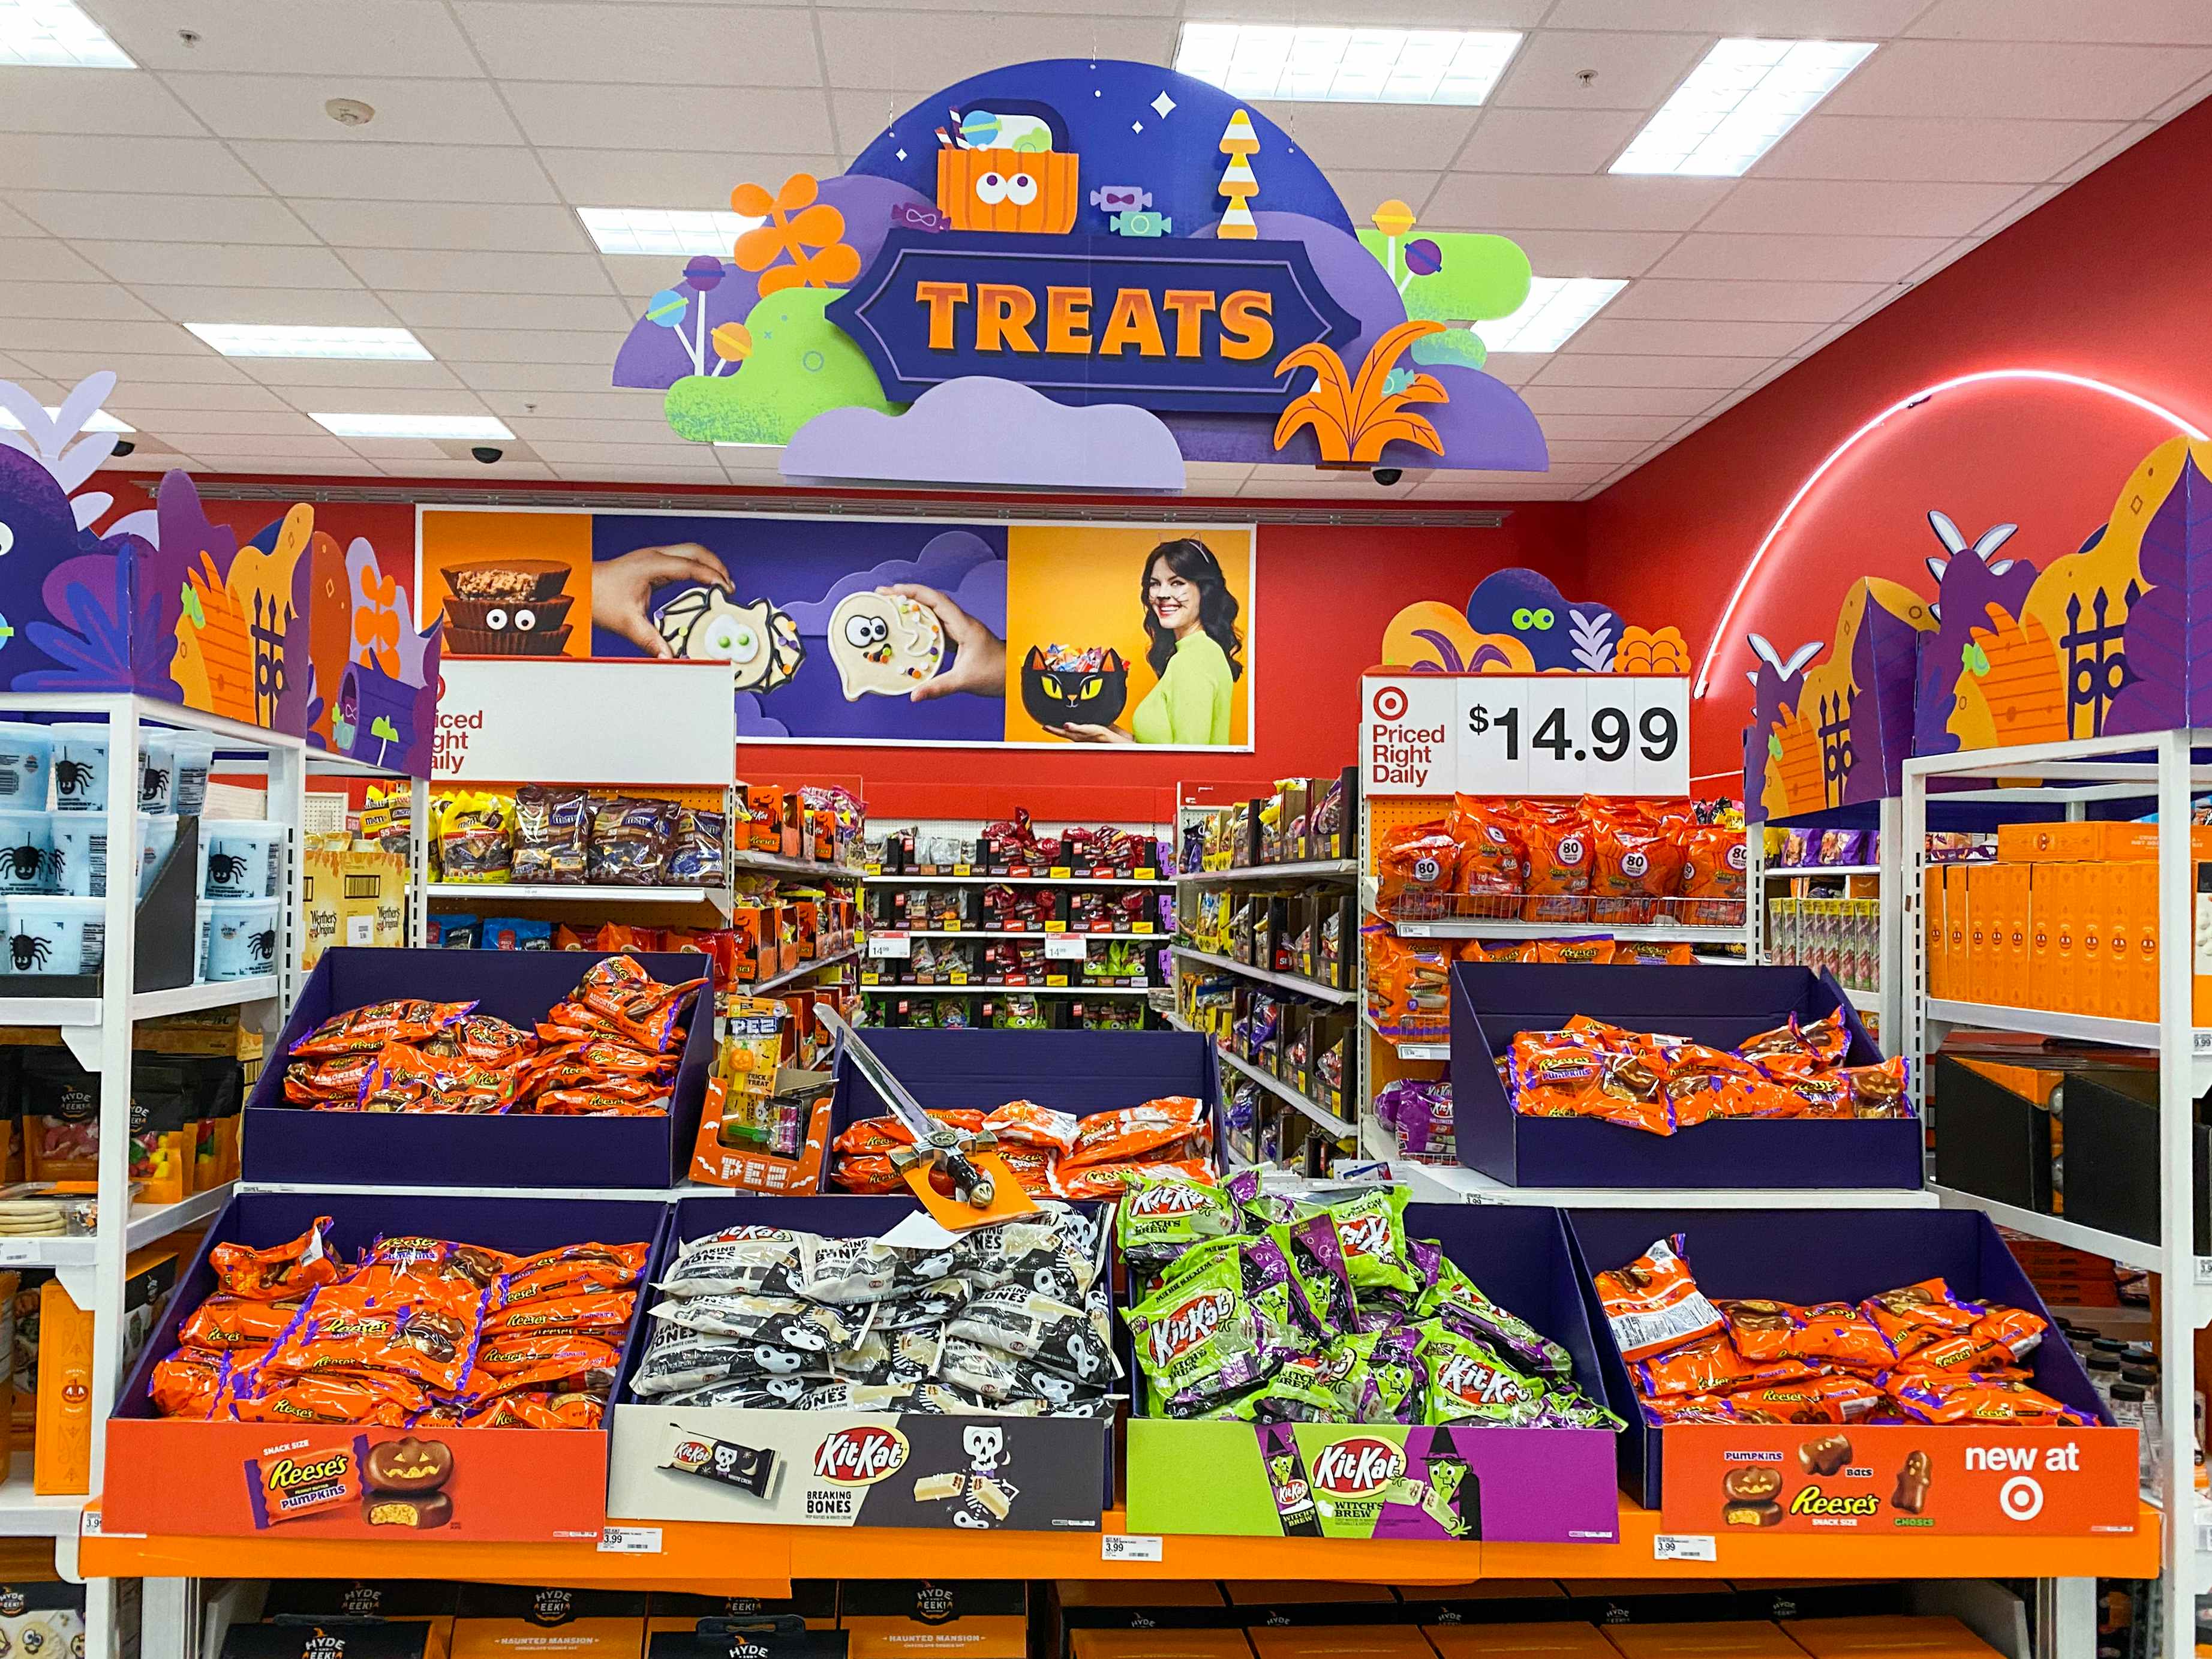 The Target Halloween Treats section.